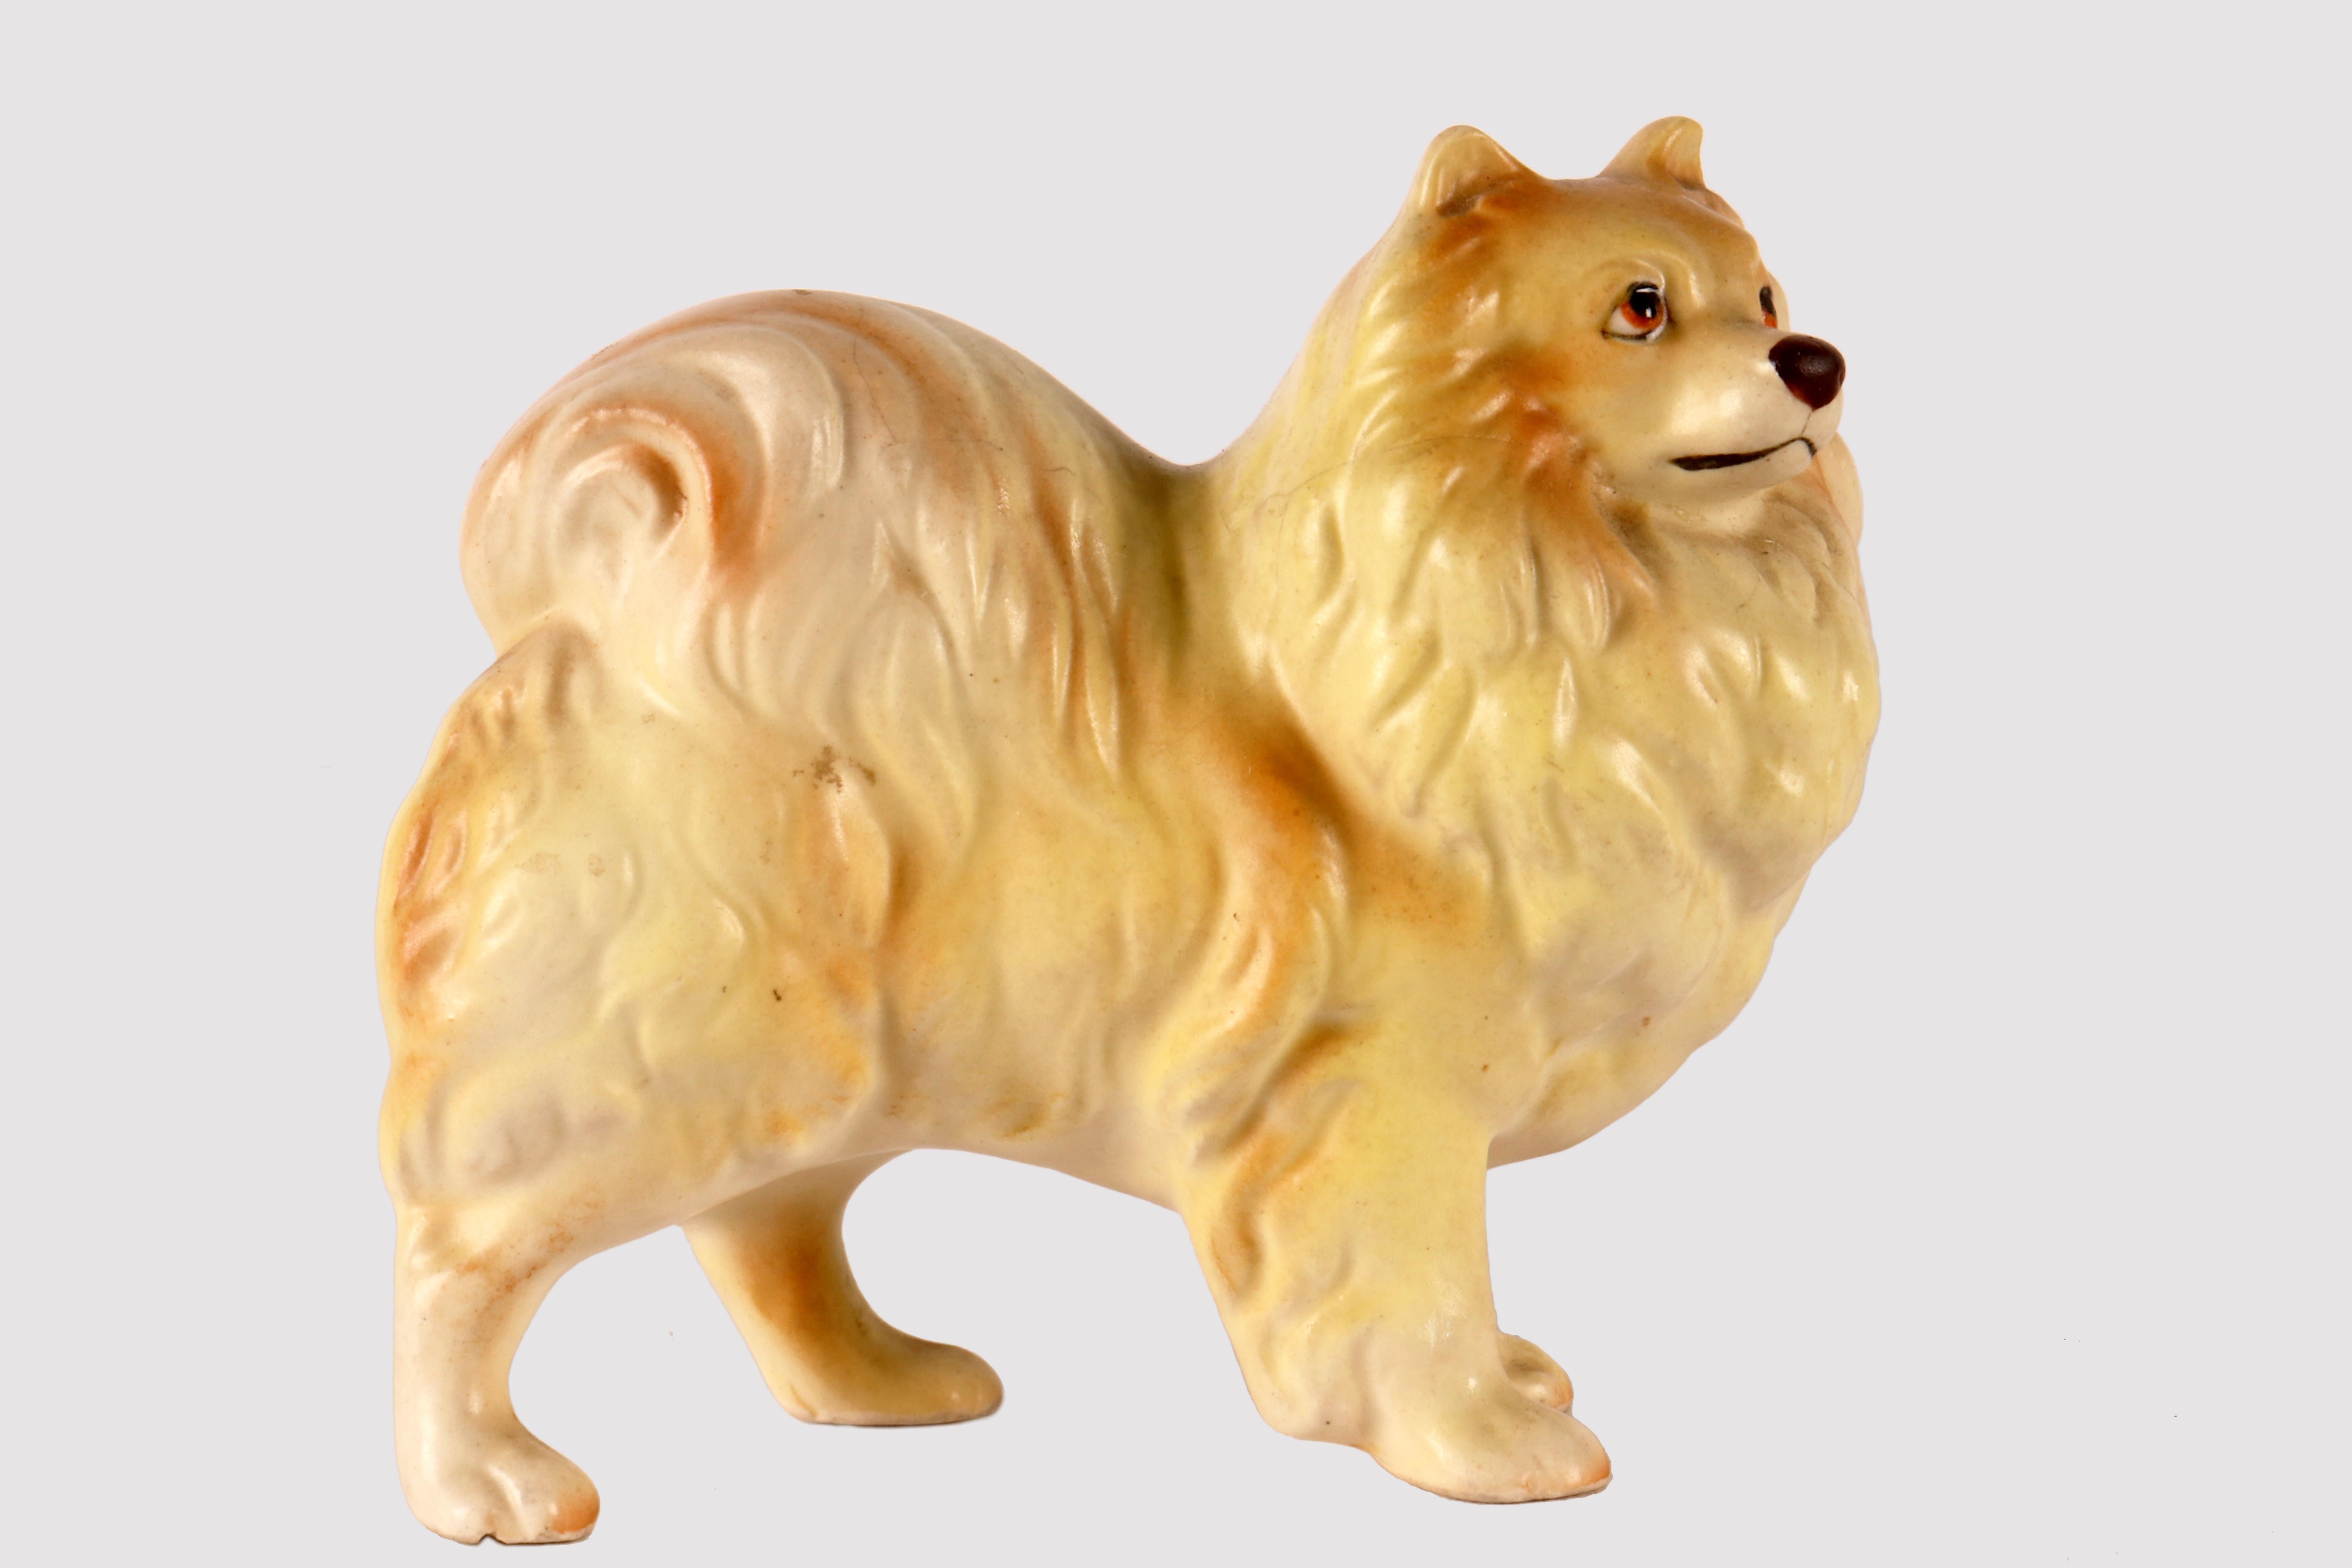 Painted ceramic sculpture depicting a Pomeranian dog. England circa 1950.